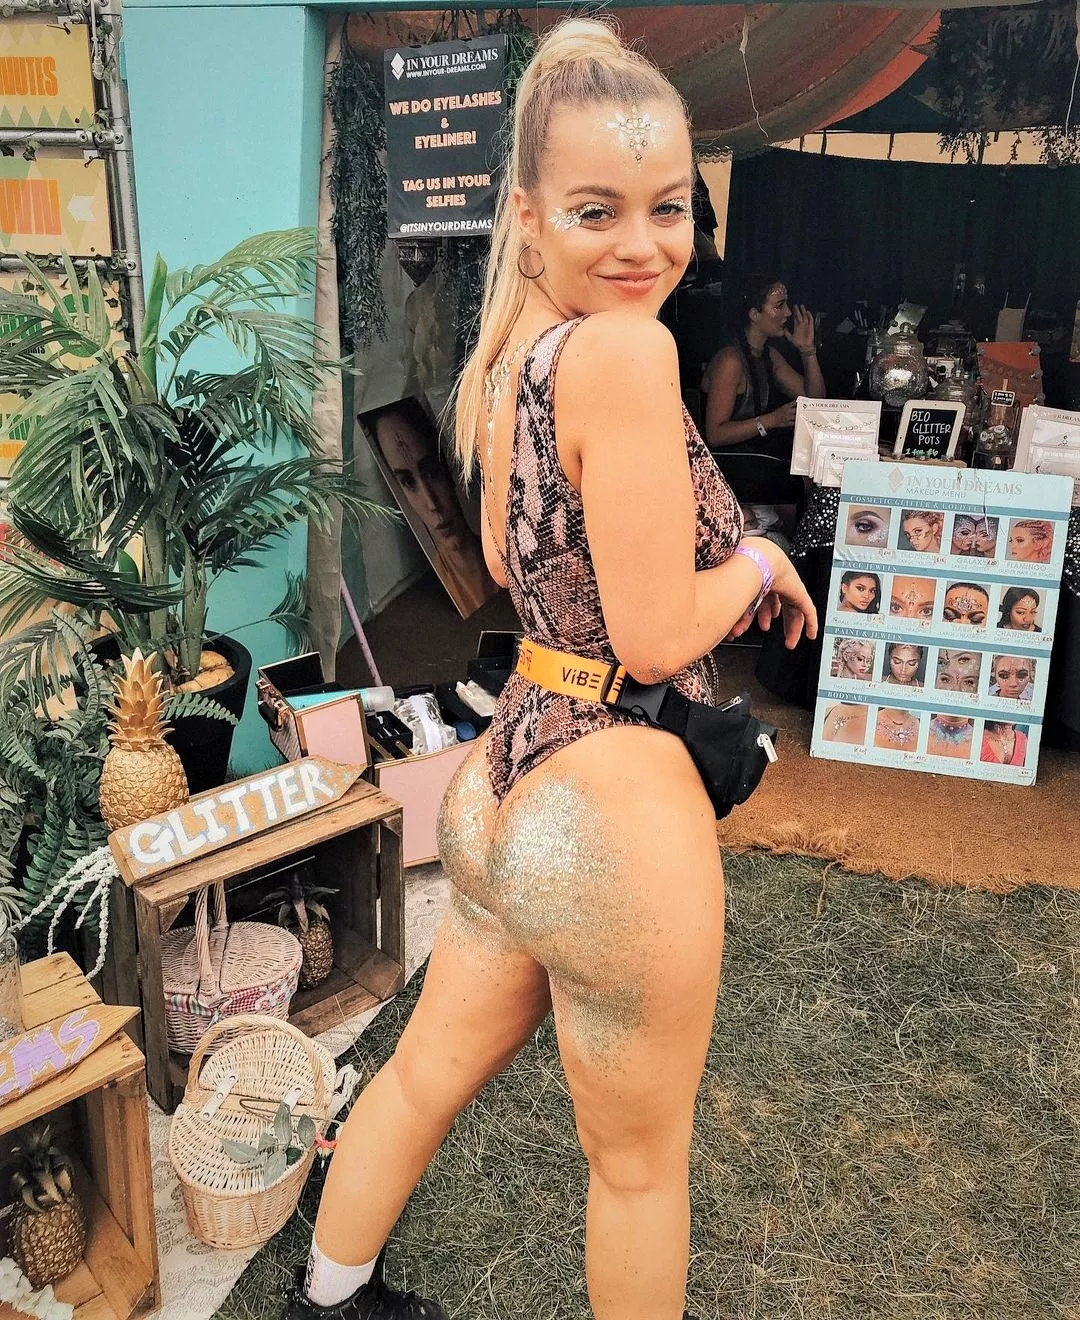 Her Poor Plumber Nudes Festivalsluts Nude Pics Org